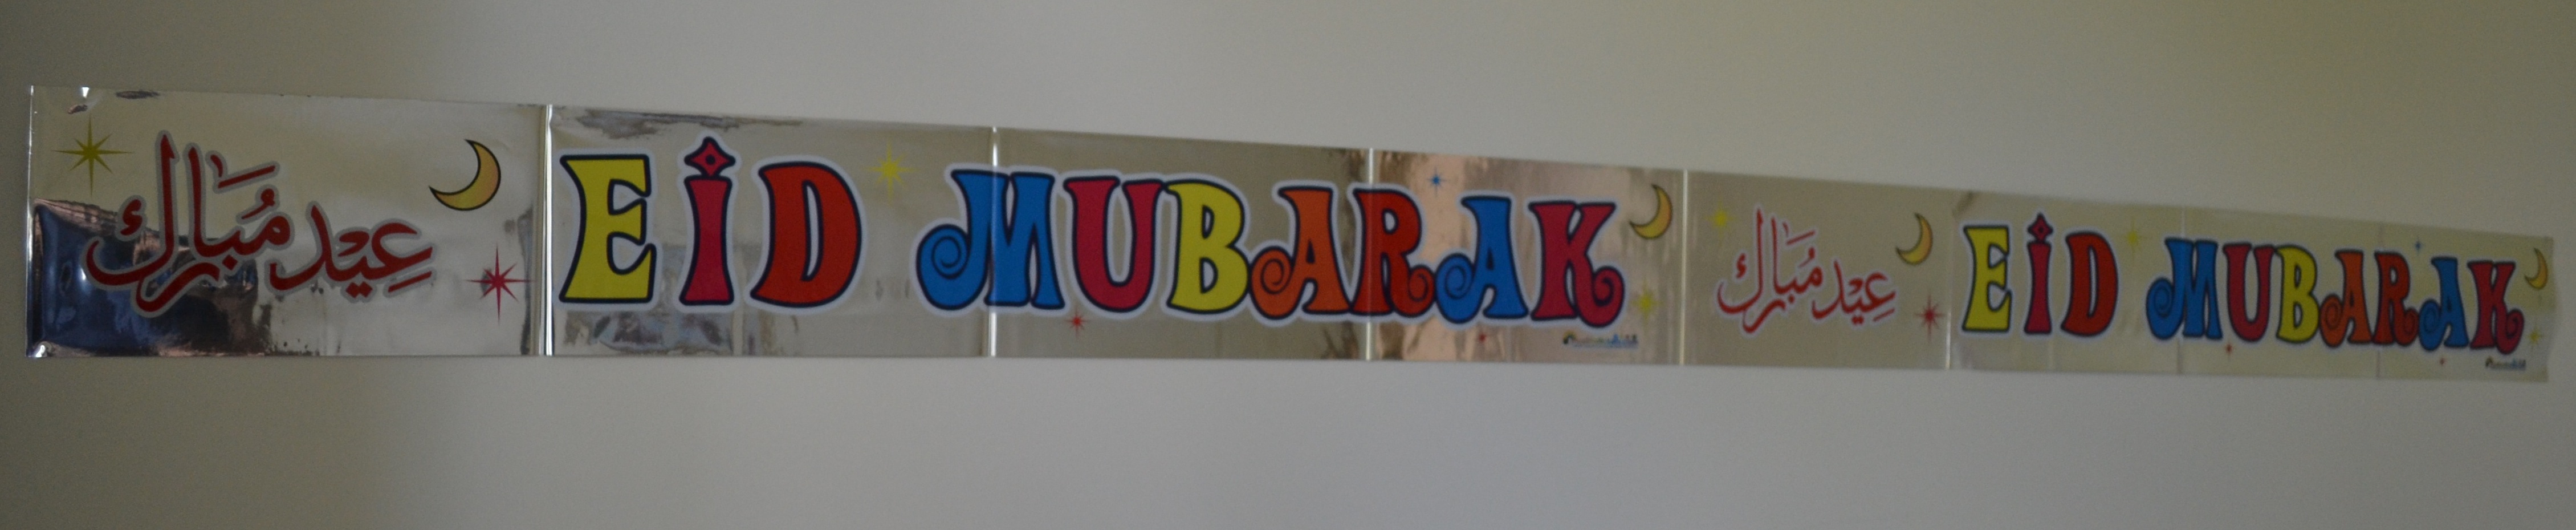 Modal Additional Images for Eid Mubarak Banner